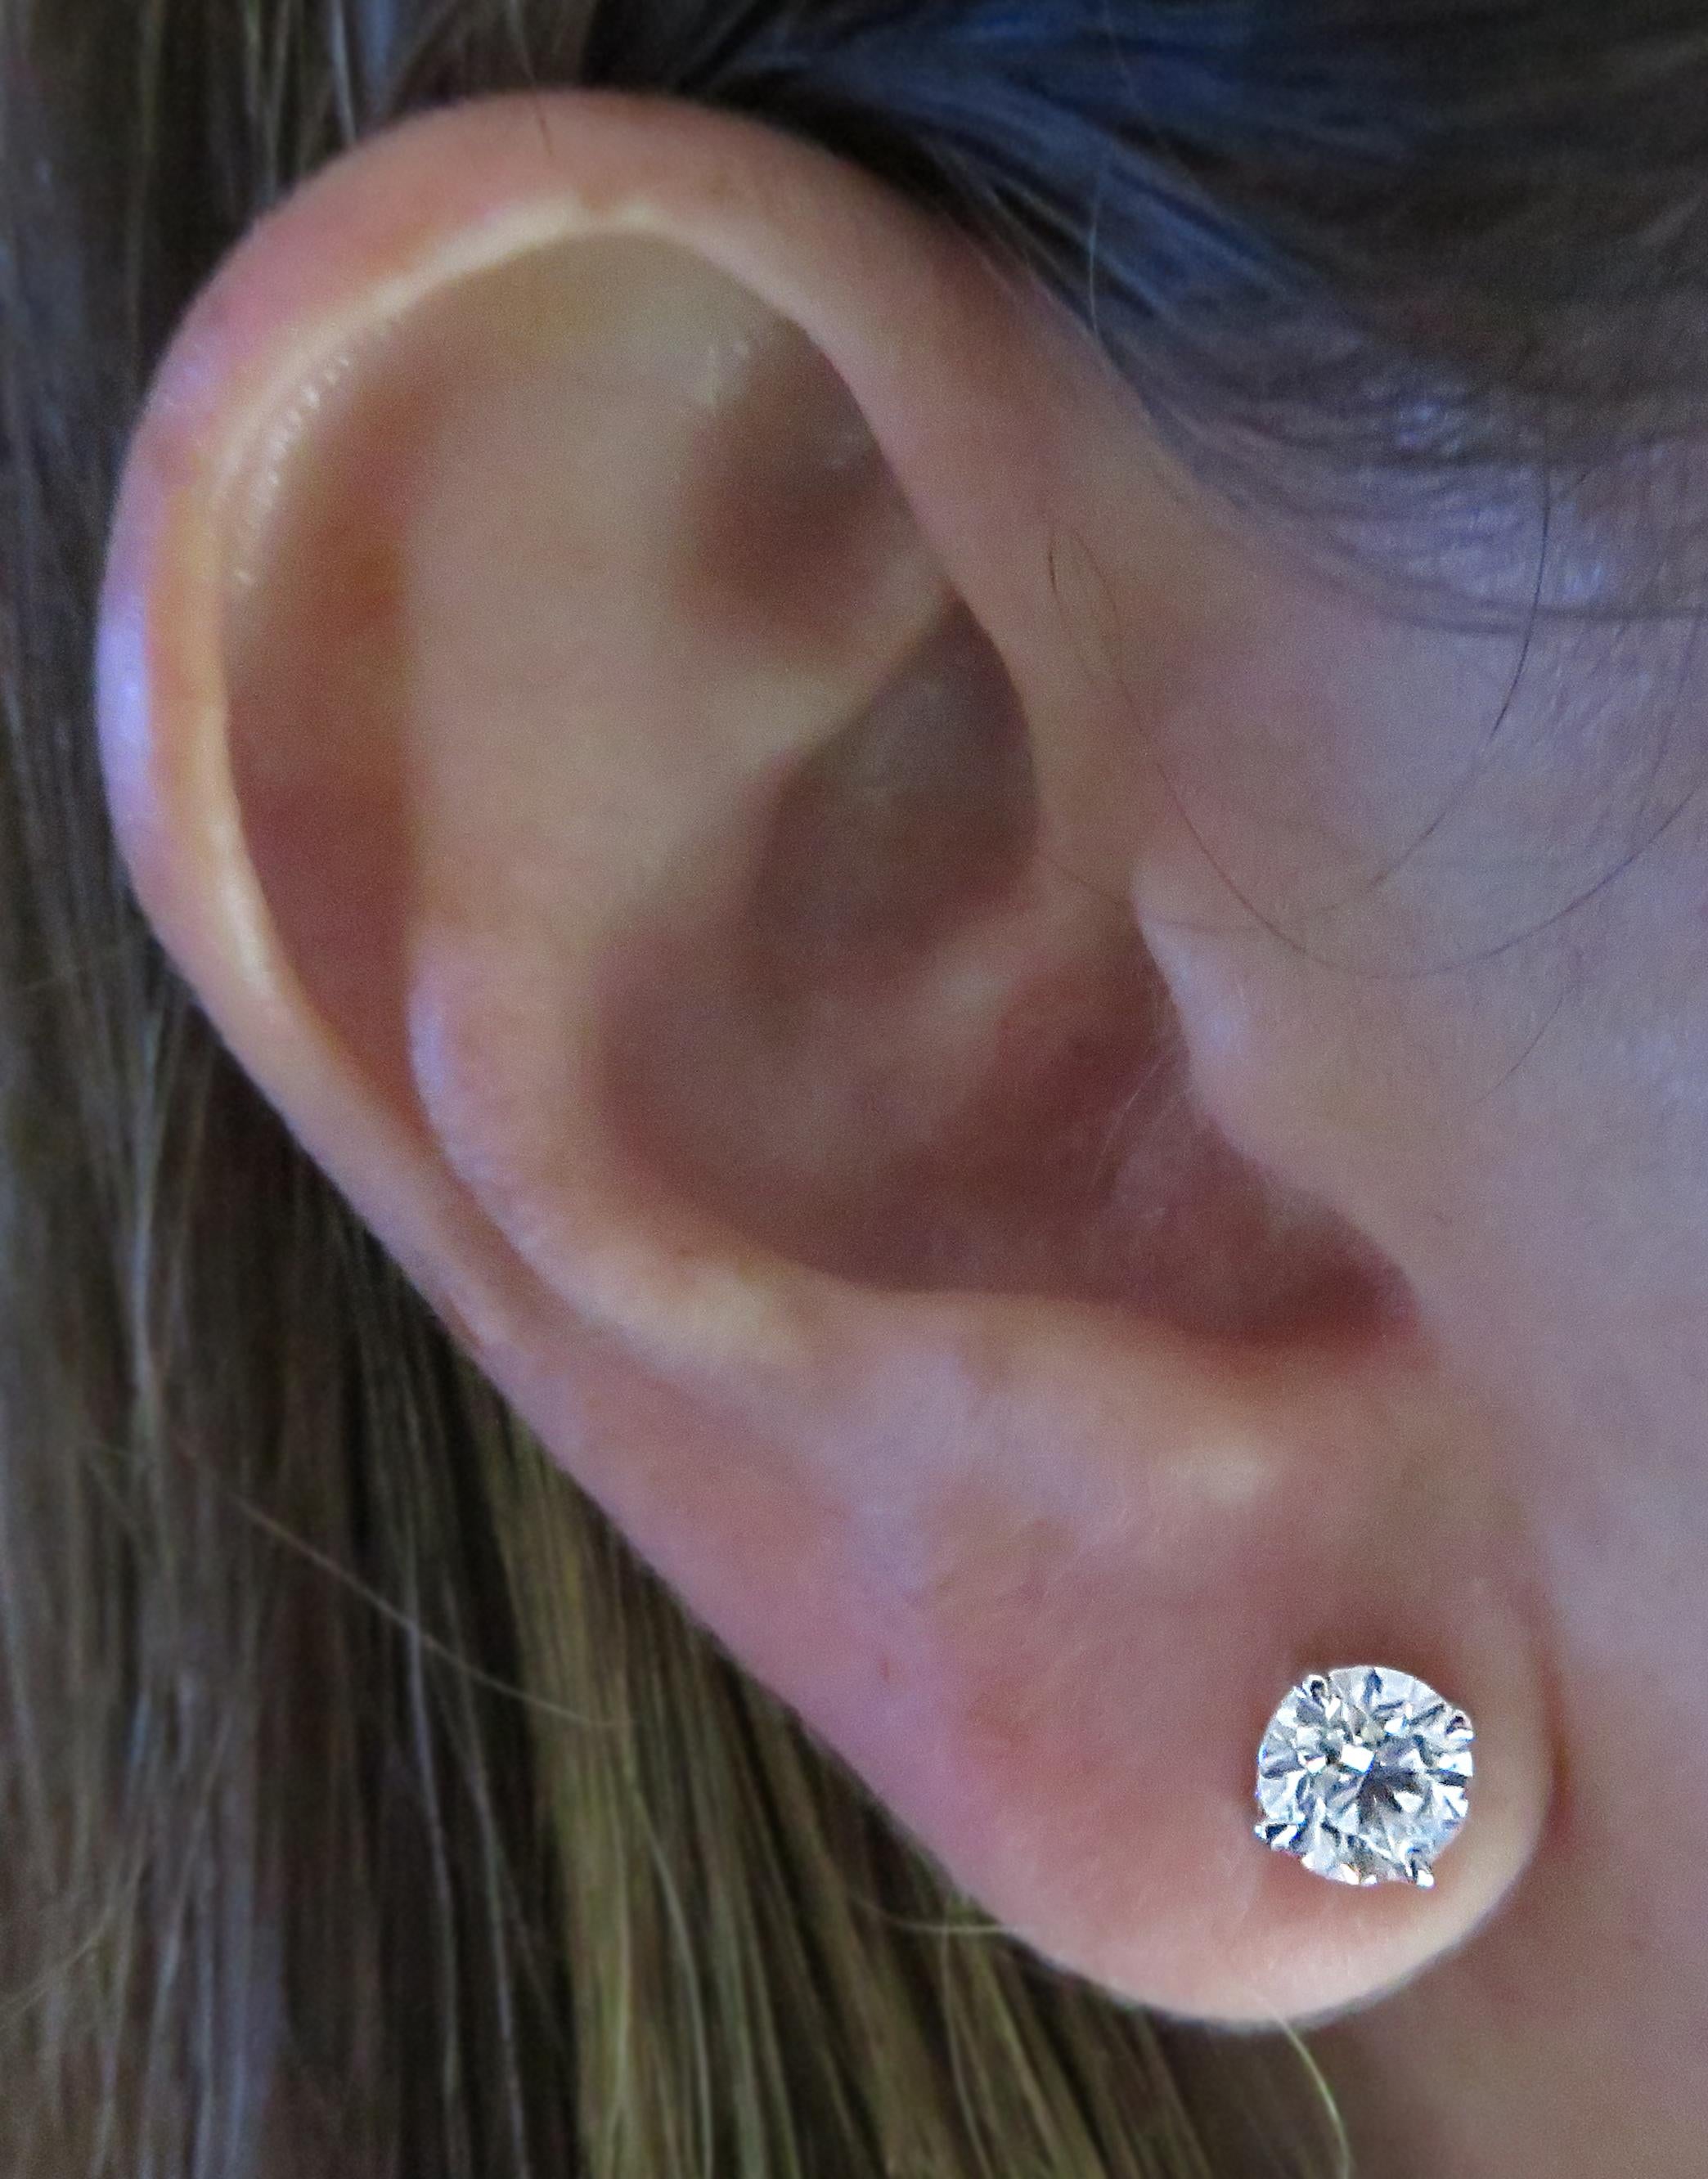 20 carat diamond earrings